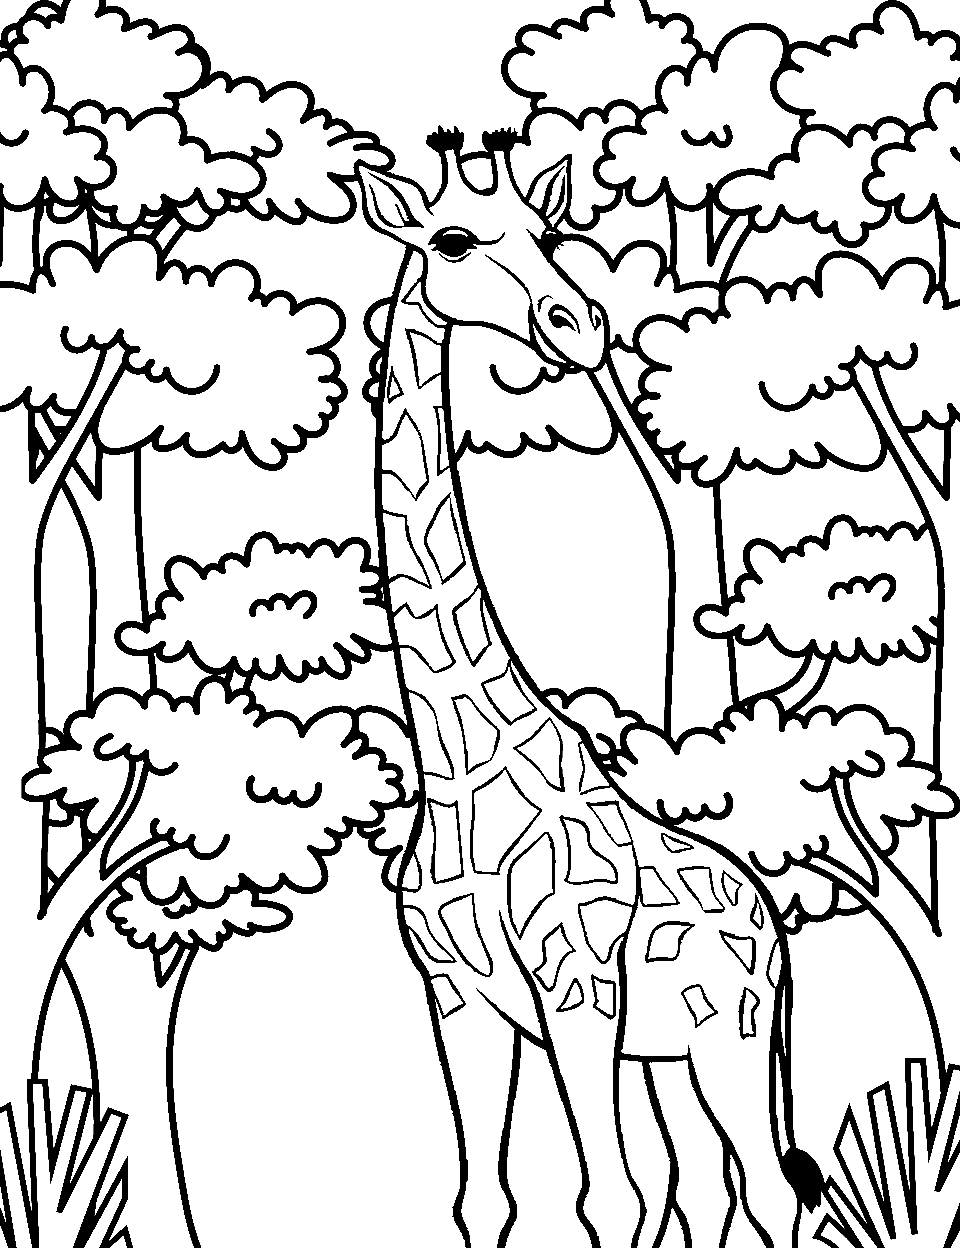 Forest Walk Giraffe Coloring Page - A giraffe wandering through a quiet woodland.